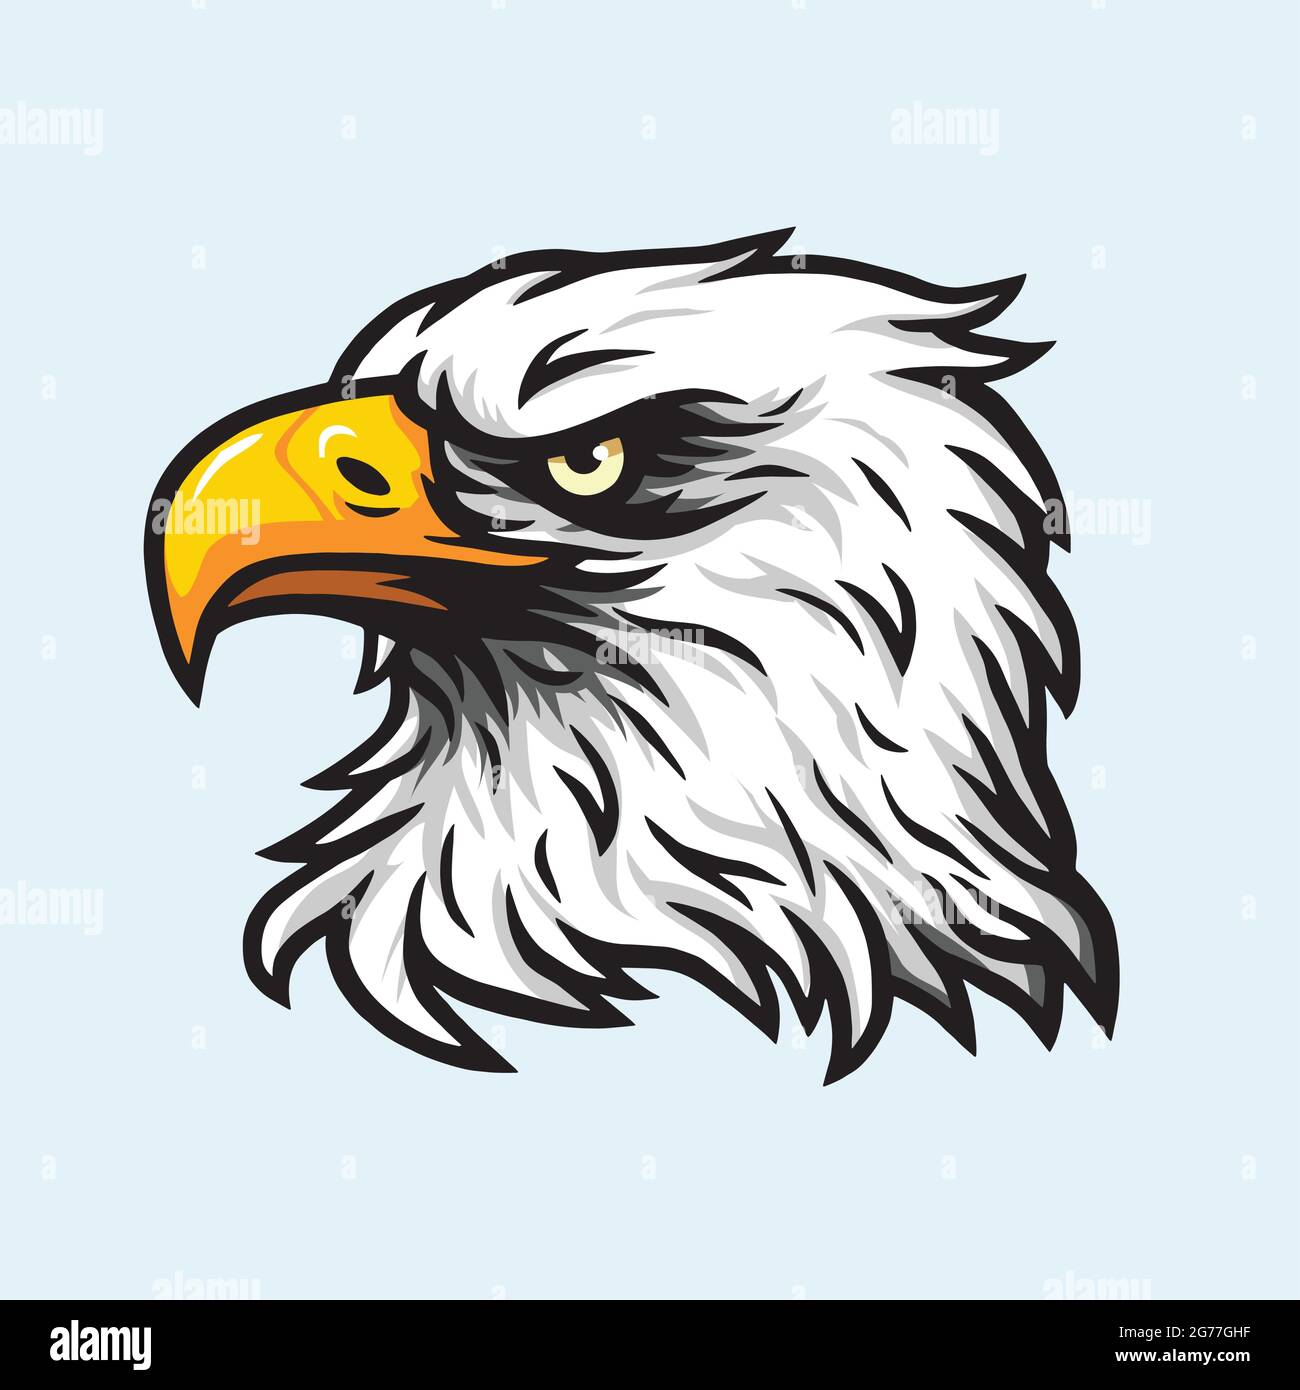 https://c8.alamy.com/comp/2G77GHF/eagle-head-mascot-vector-logo-2G77GHF.jpg